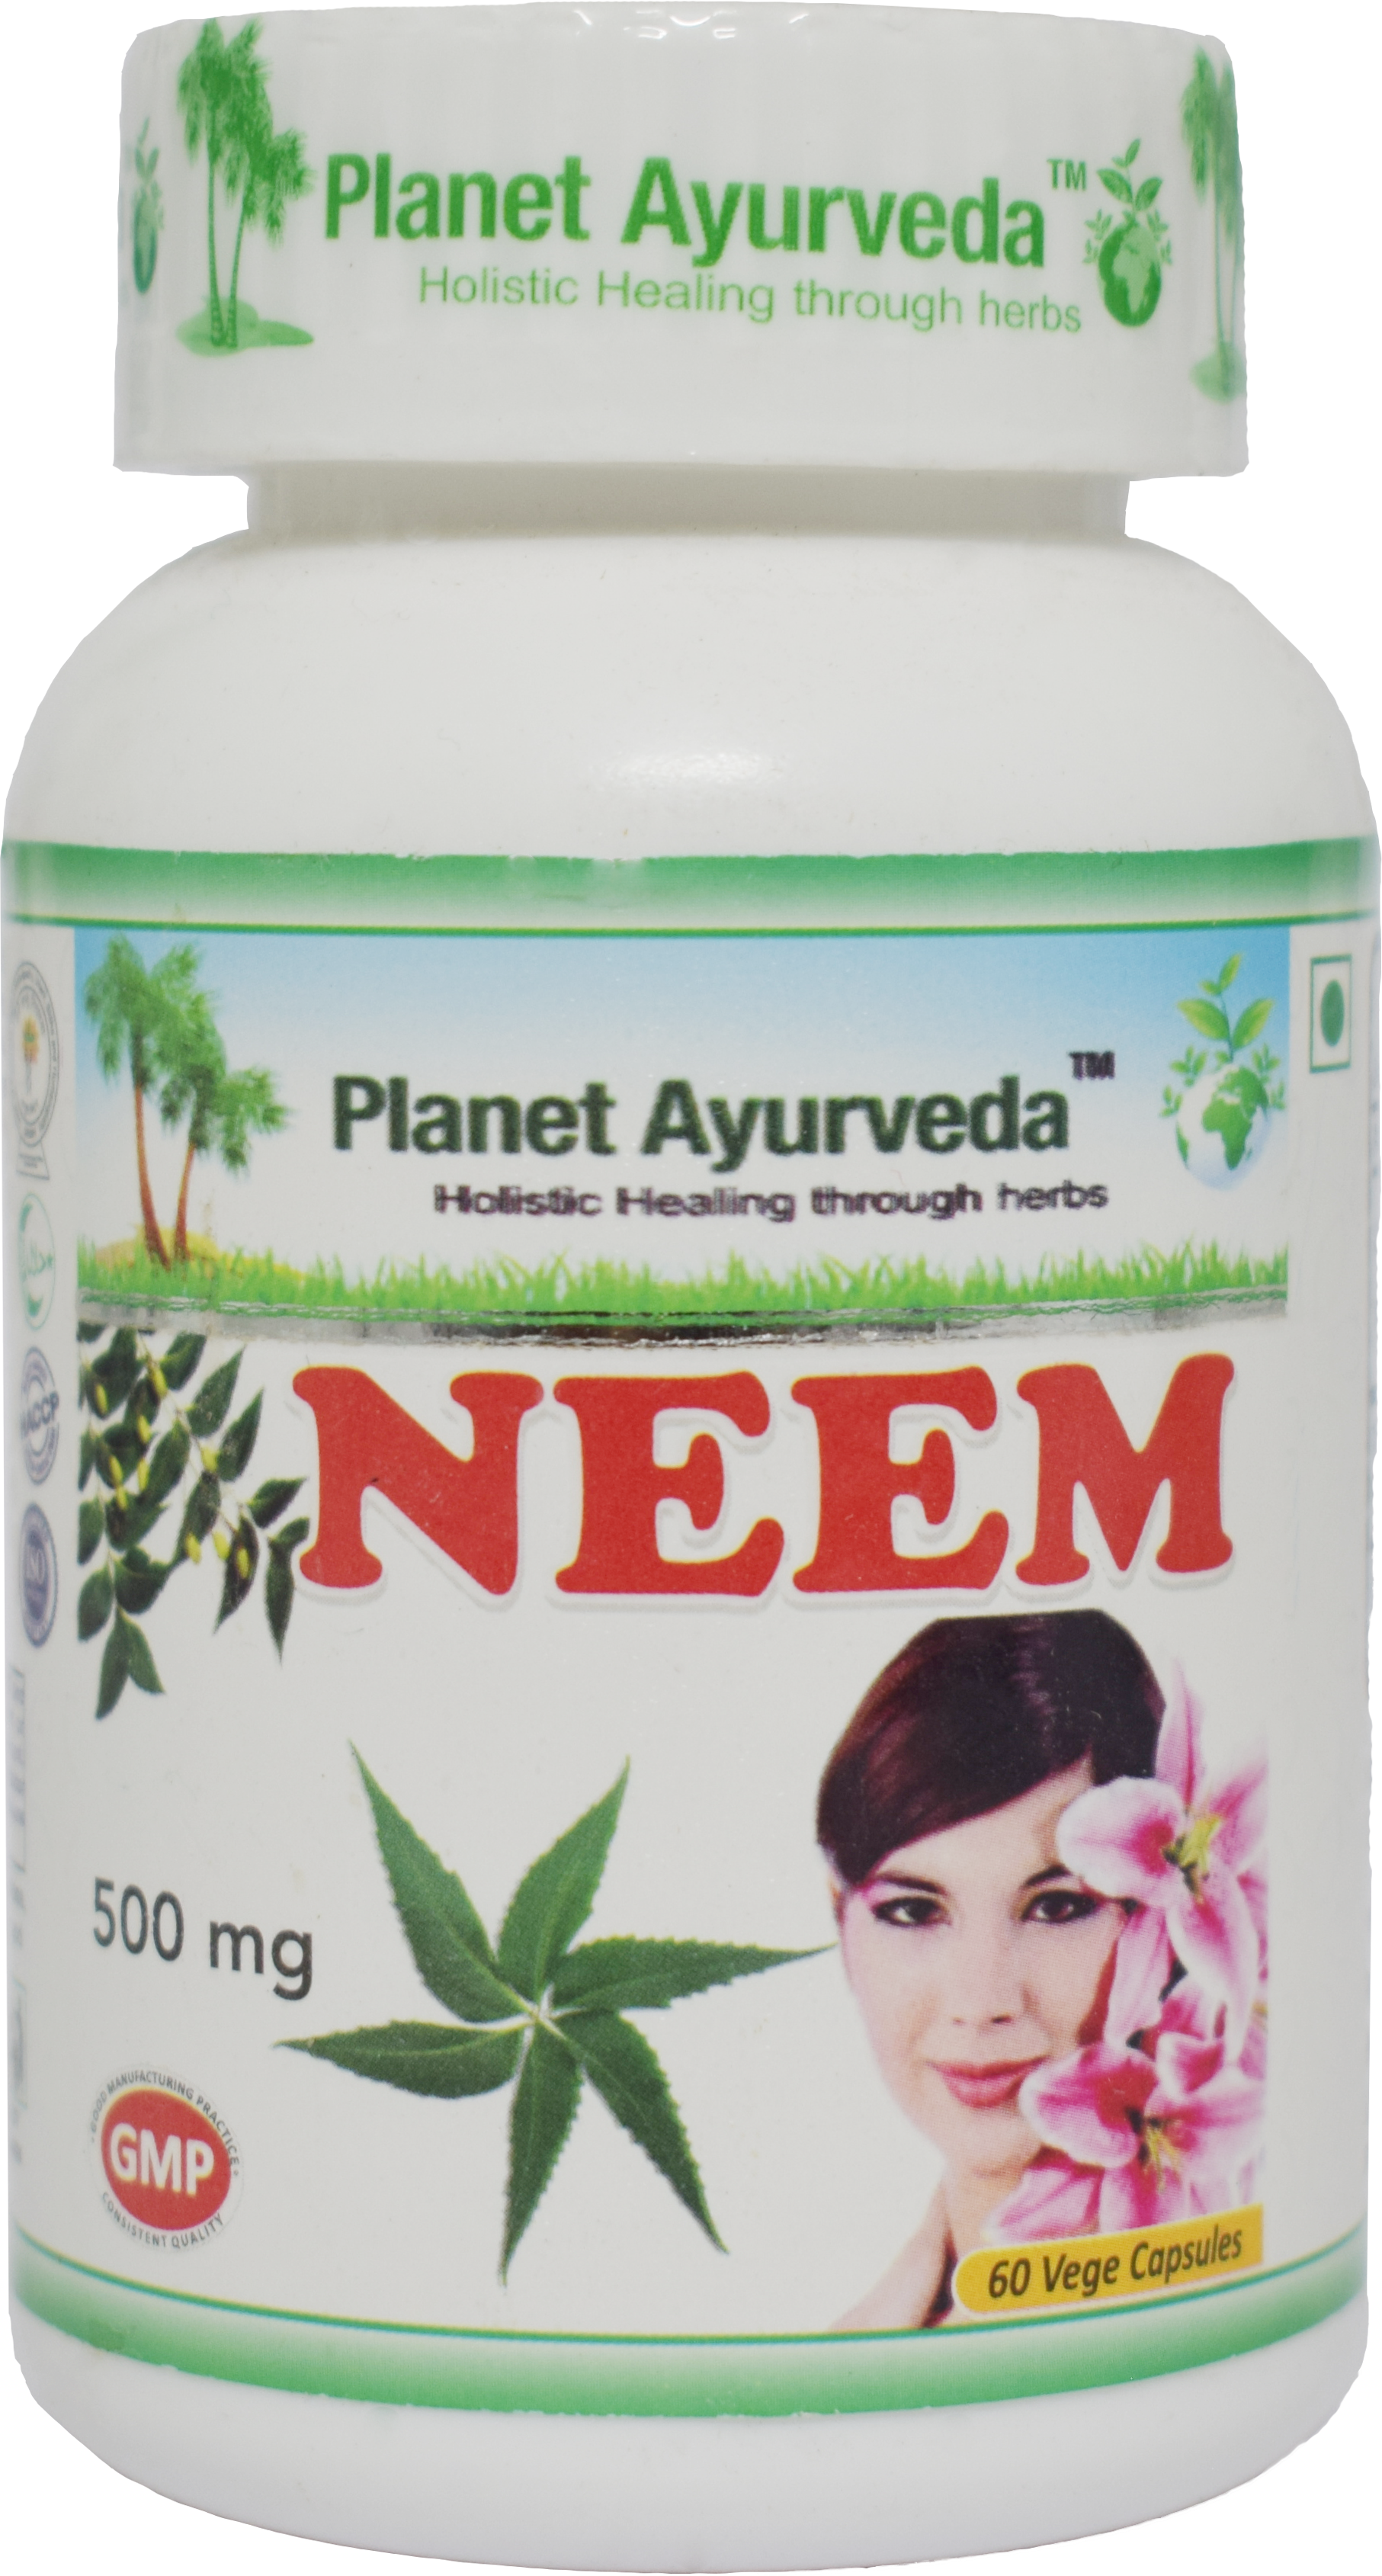 Buy Planet Ayurveda Neem Capsules at Best Price Online